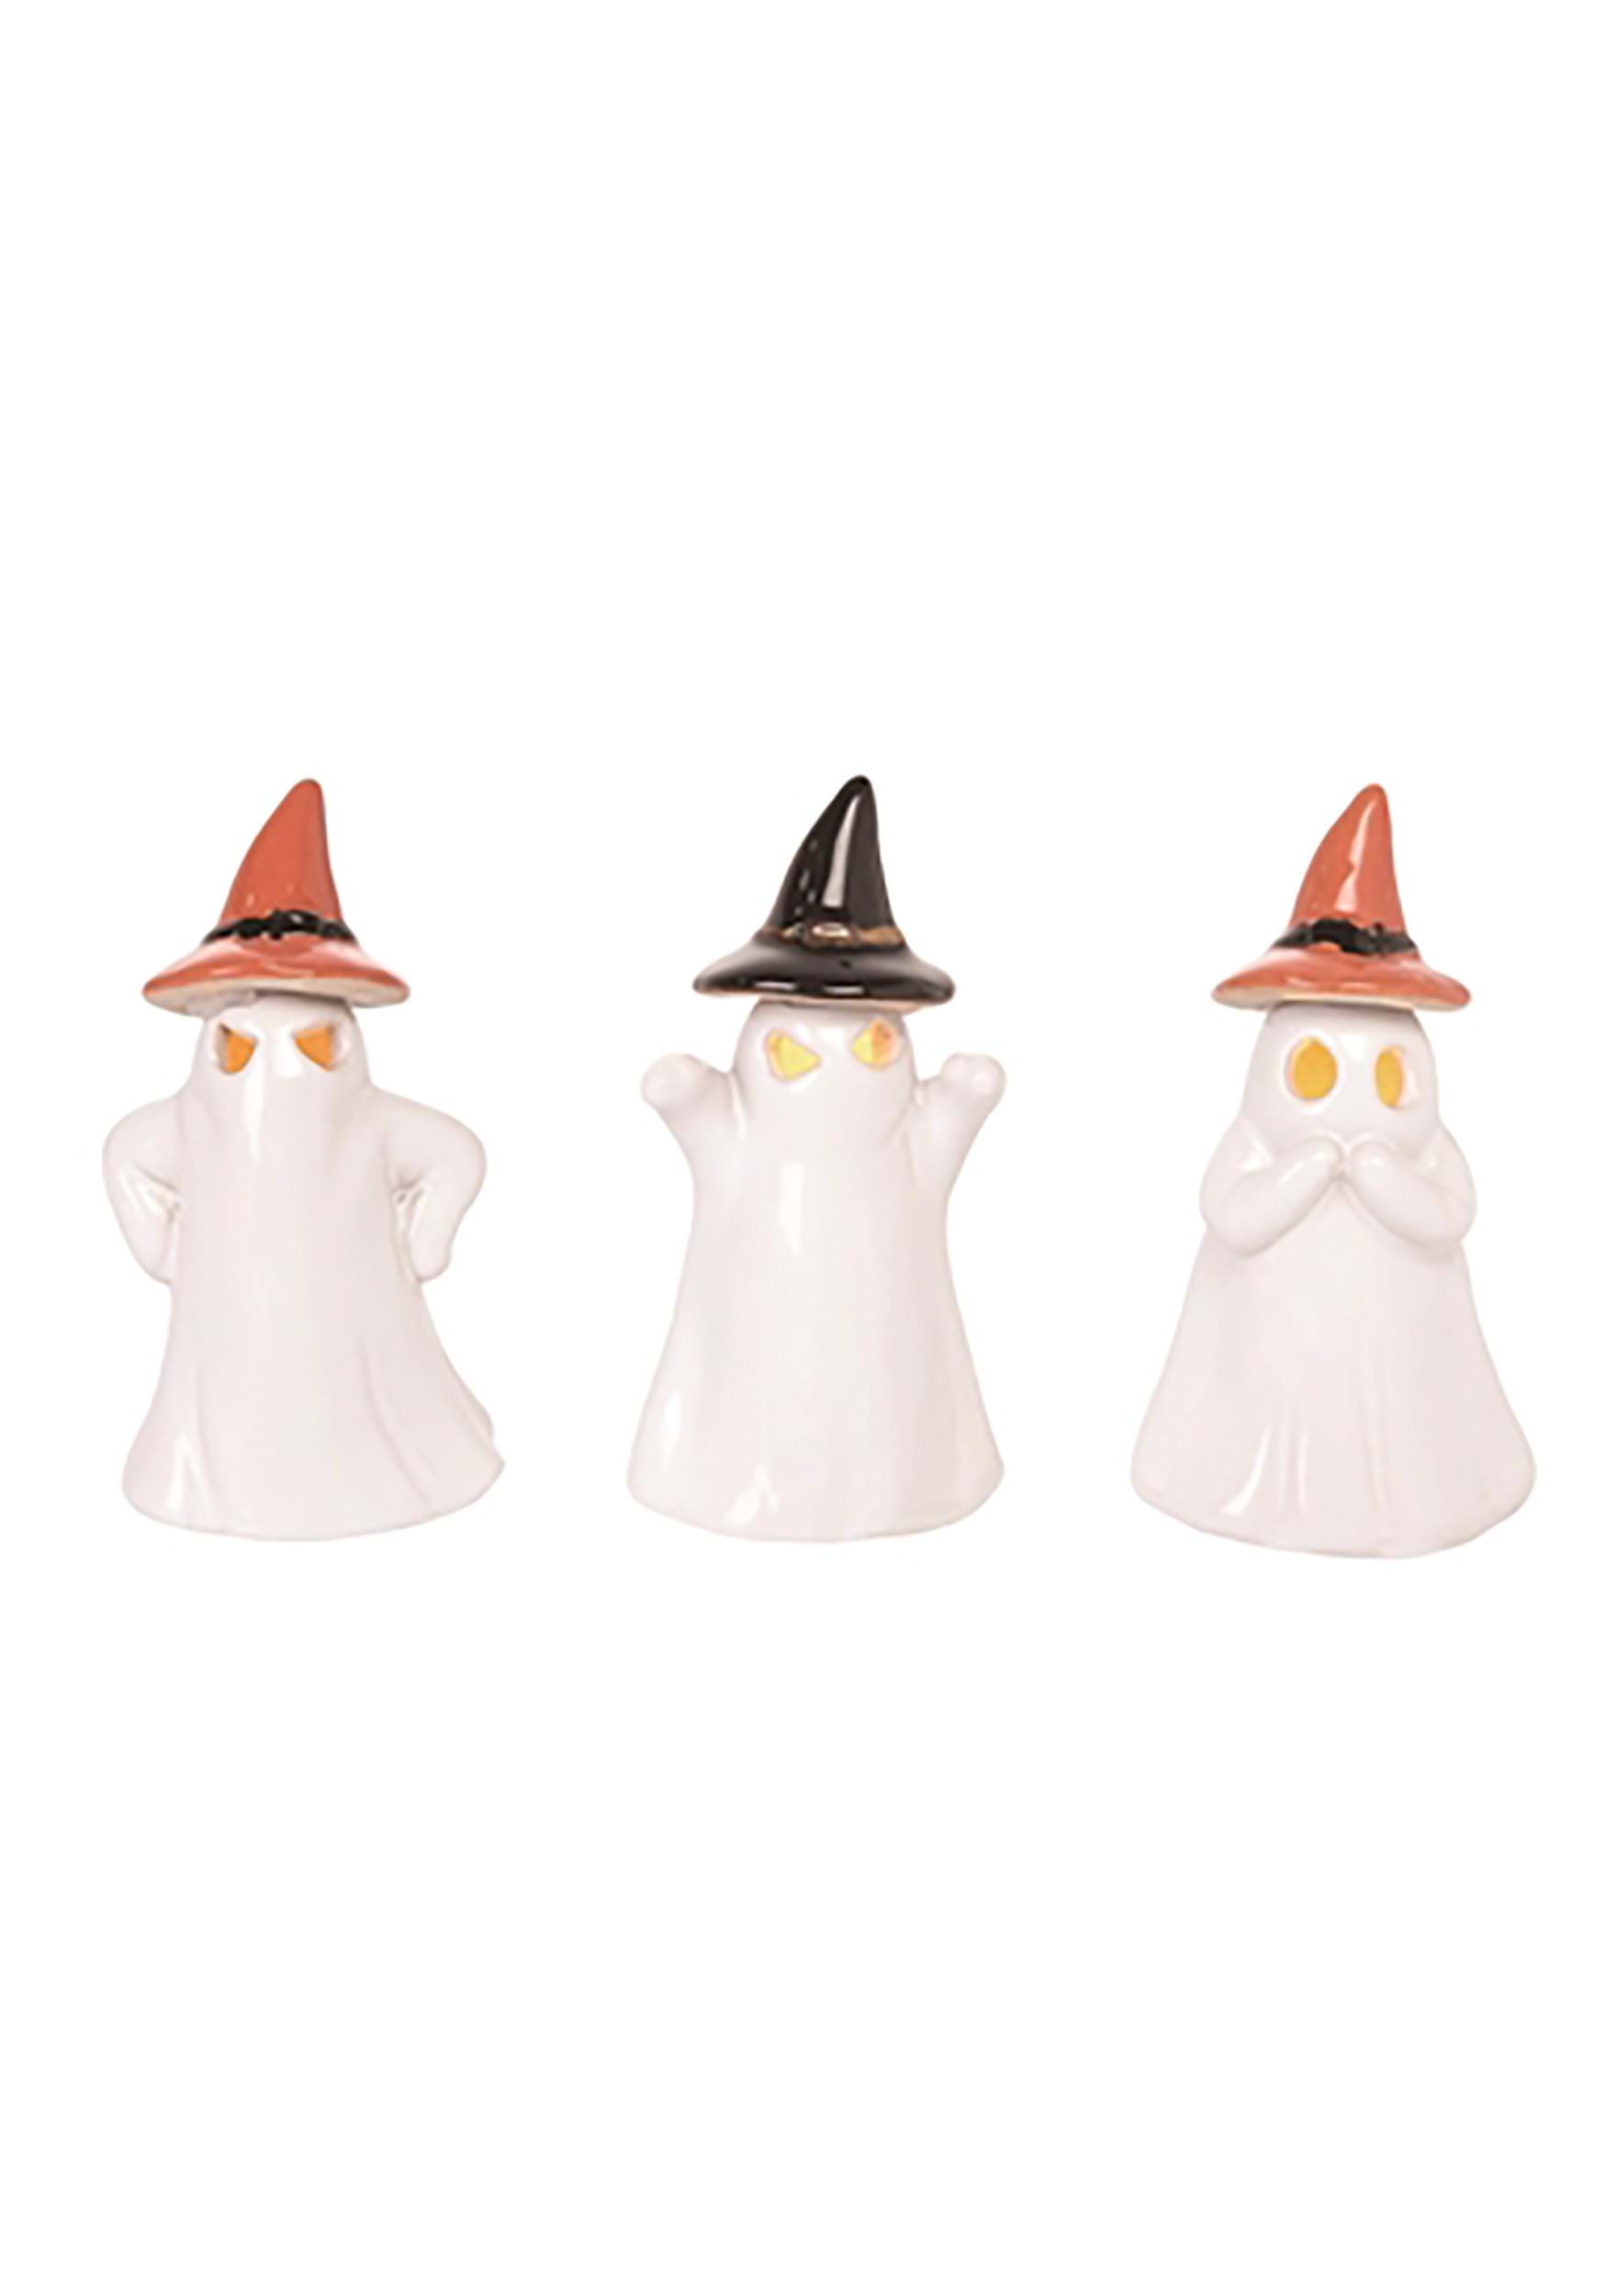 4" Ceramic Light Up Ghost Figures Set